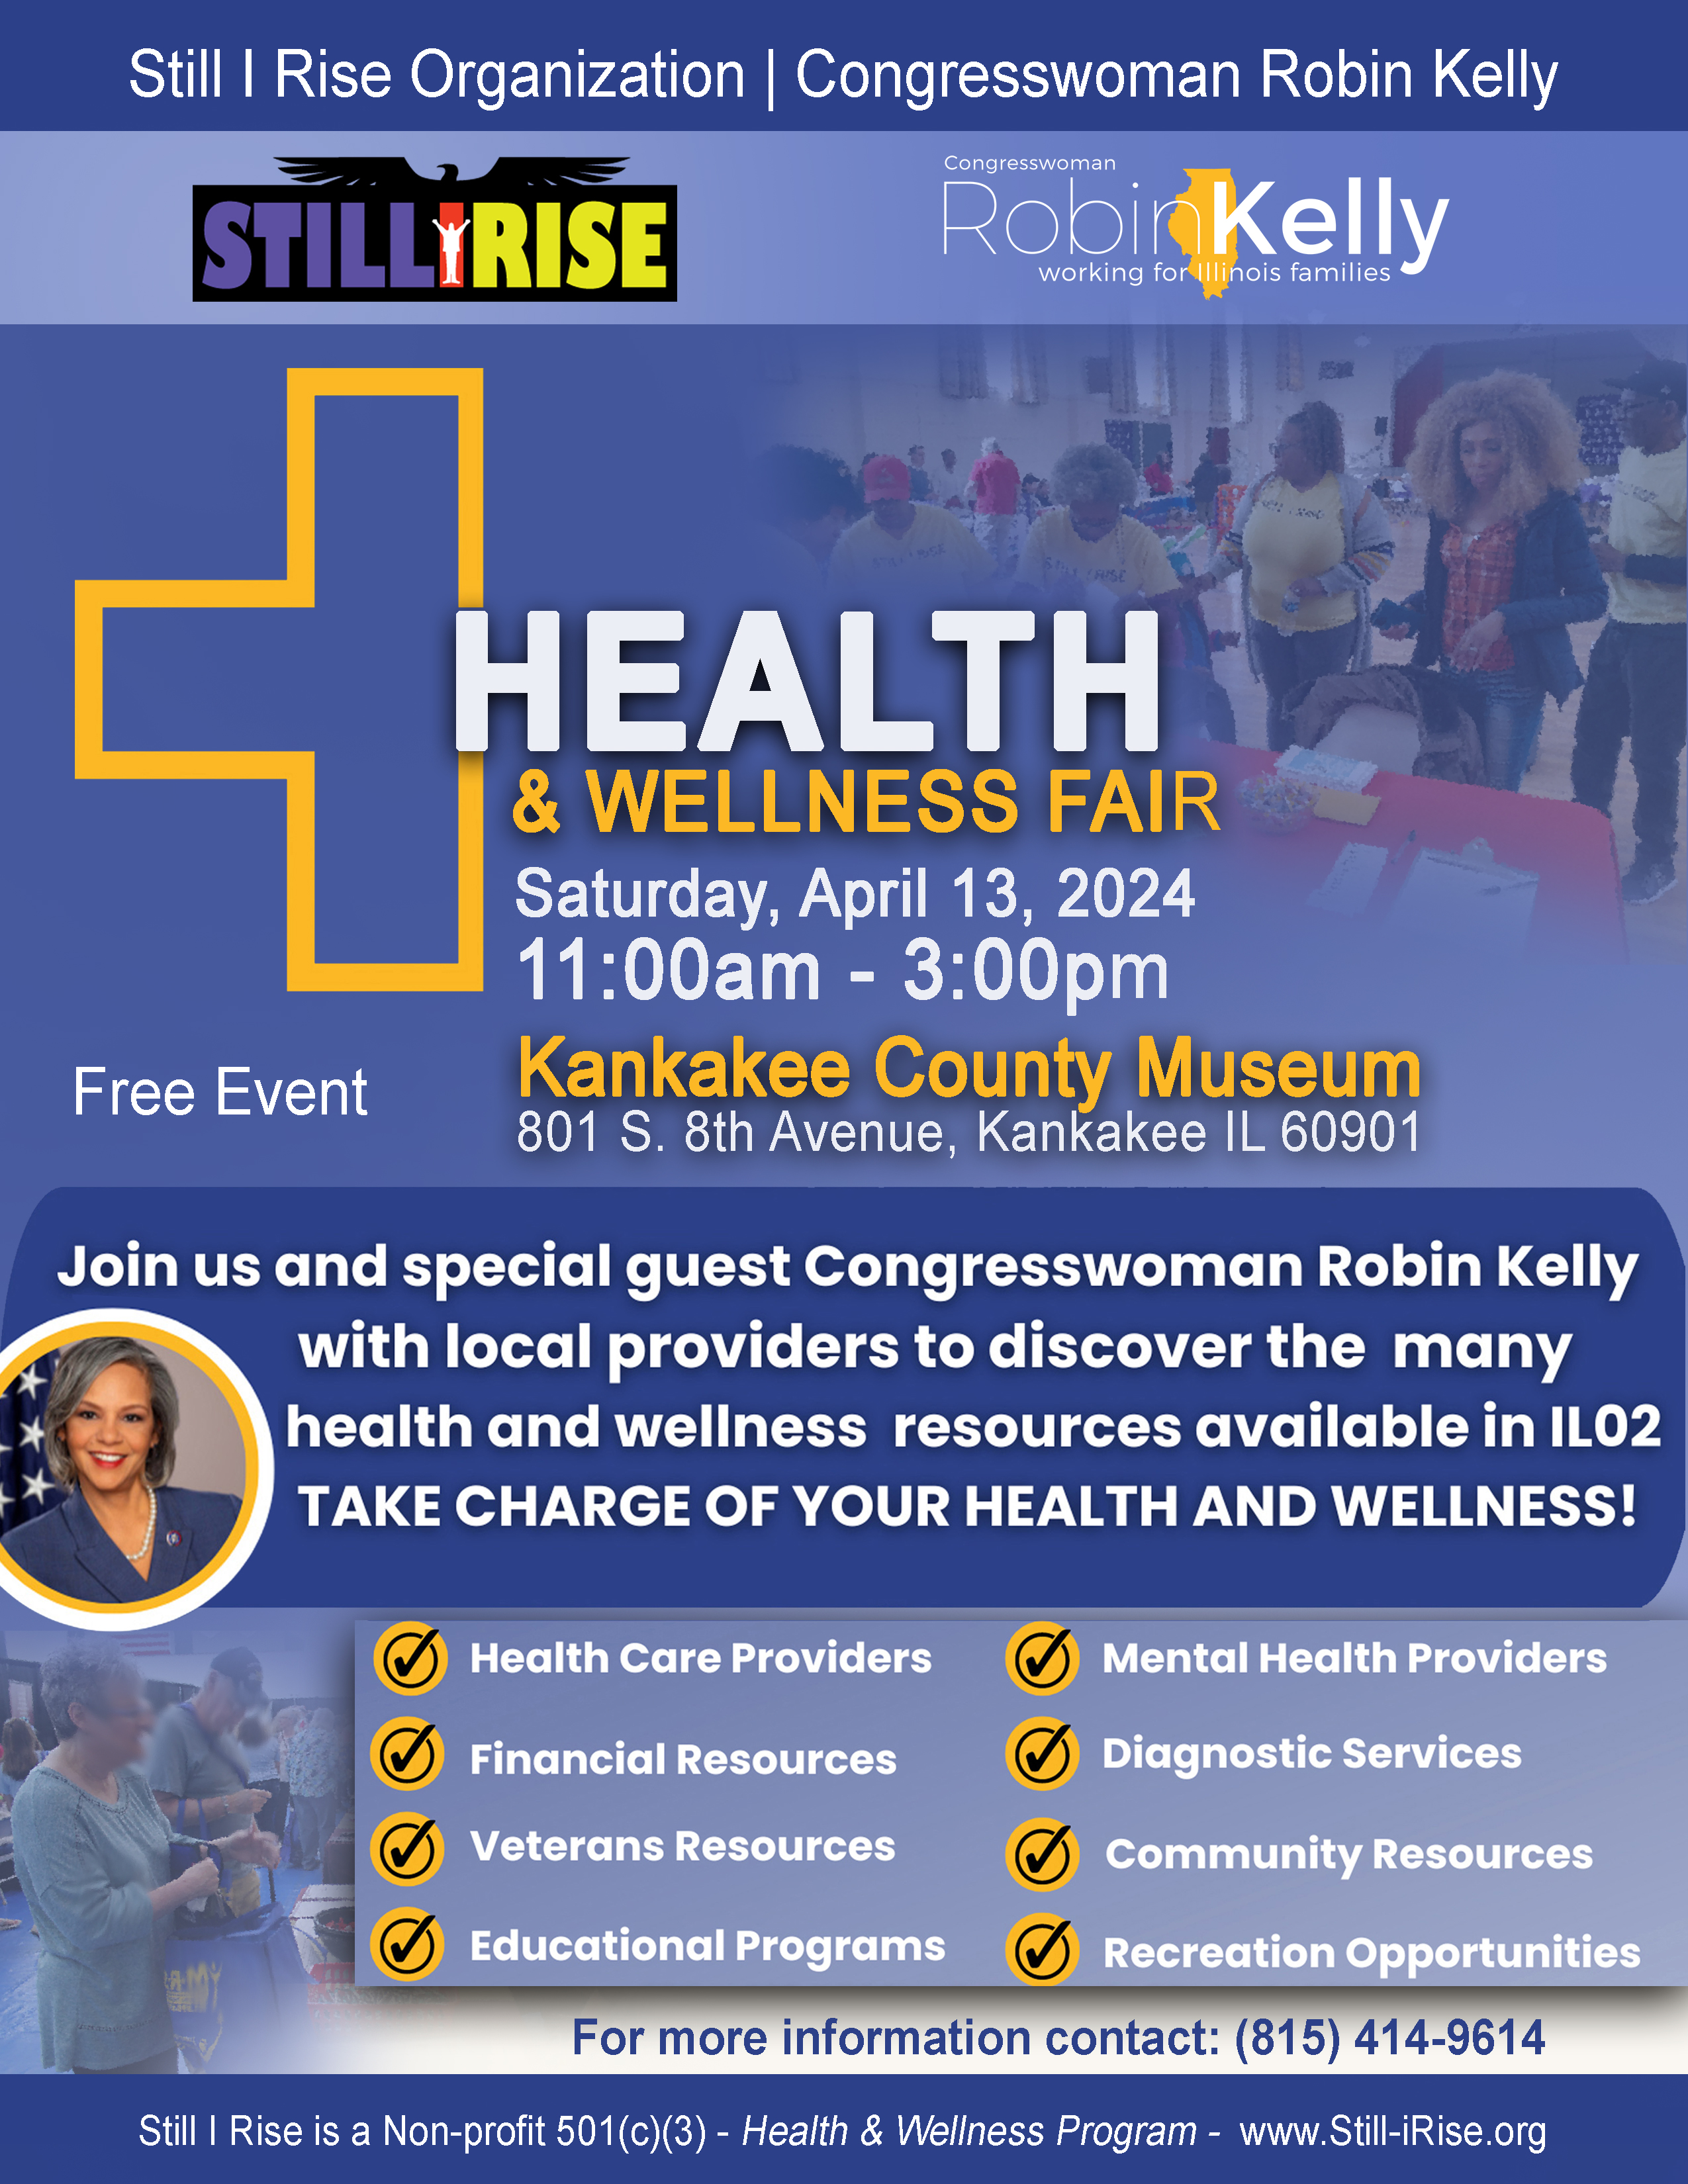 Still I Rise & Congresswoman Robin Kelly (2nd Congressional District): Health and Wellness Fair